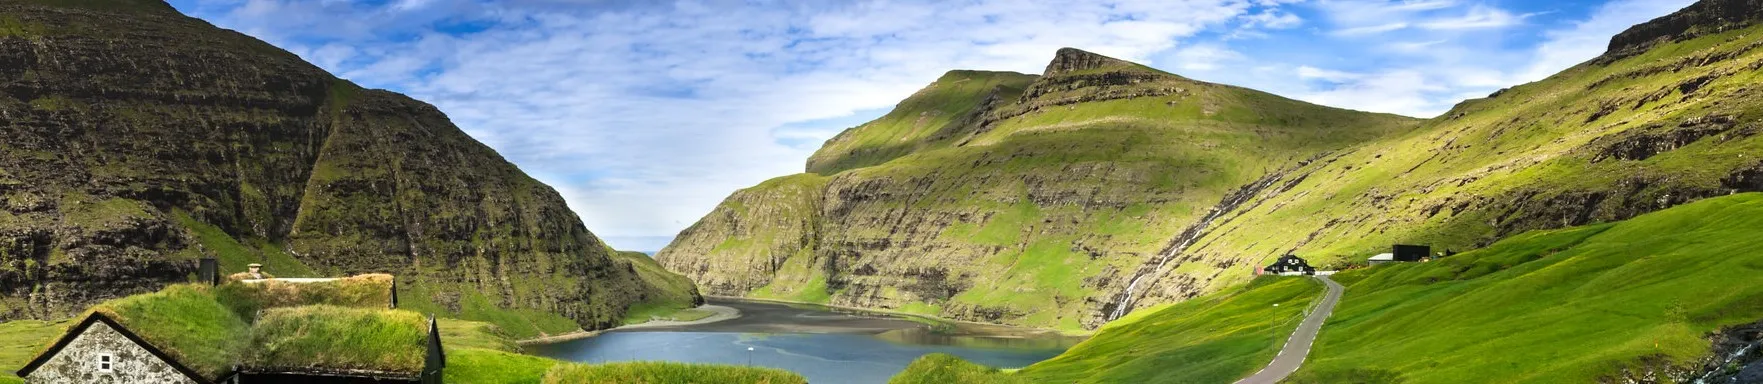 Faroe Islands Banner Image